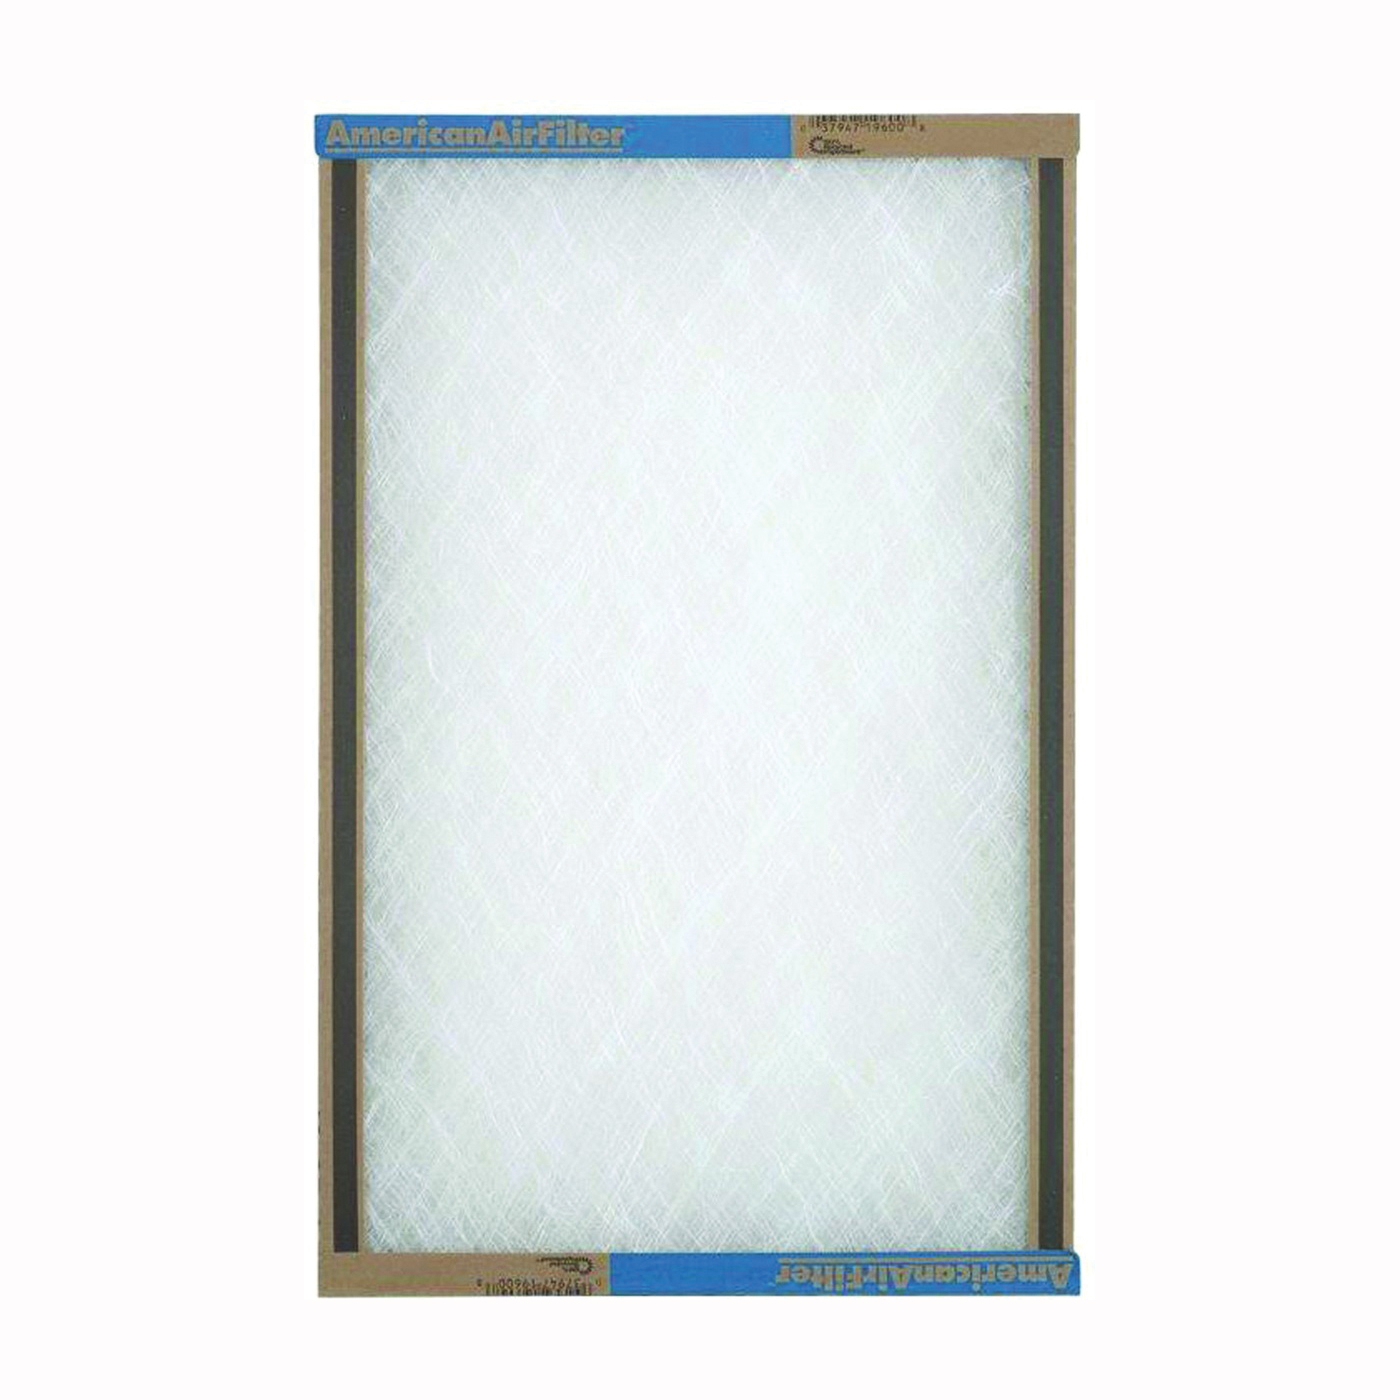 120241 Panel Air Filter, 24 x 20 x 1, Chipboard Frame